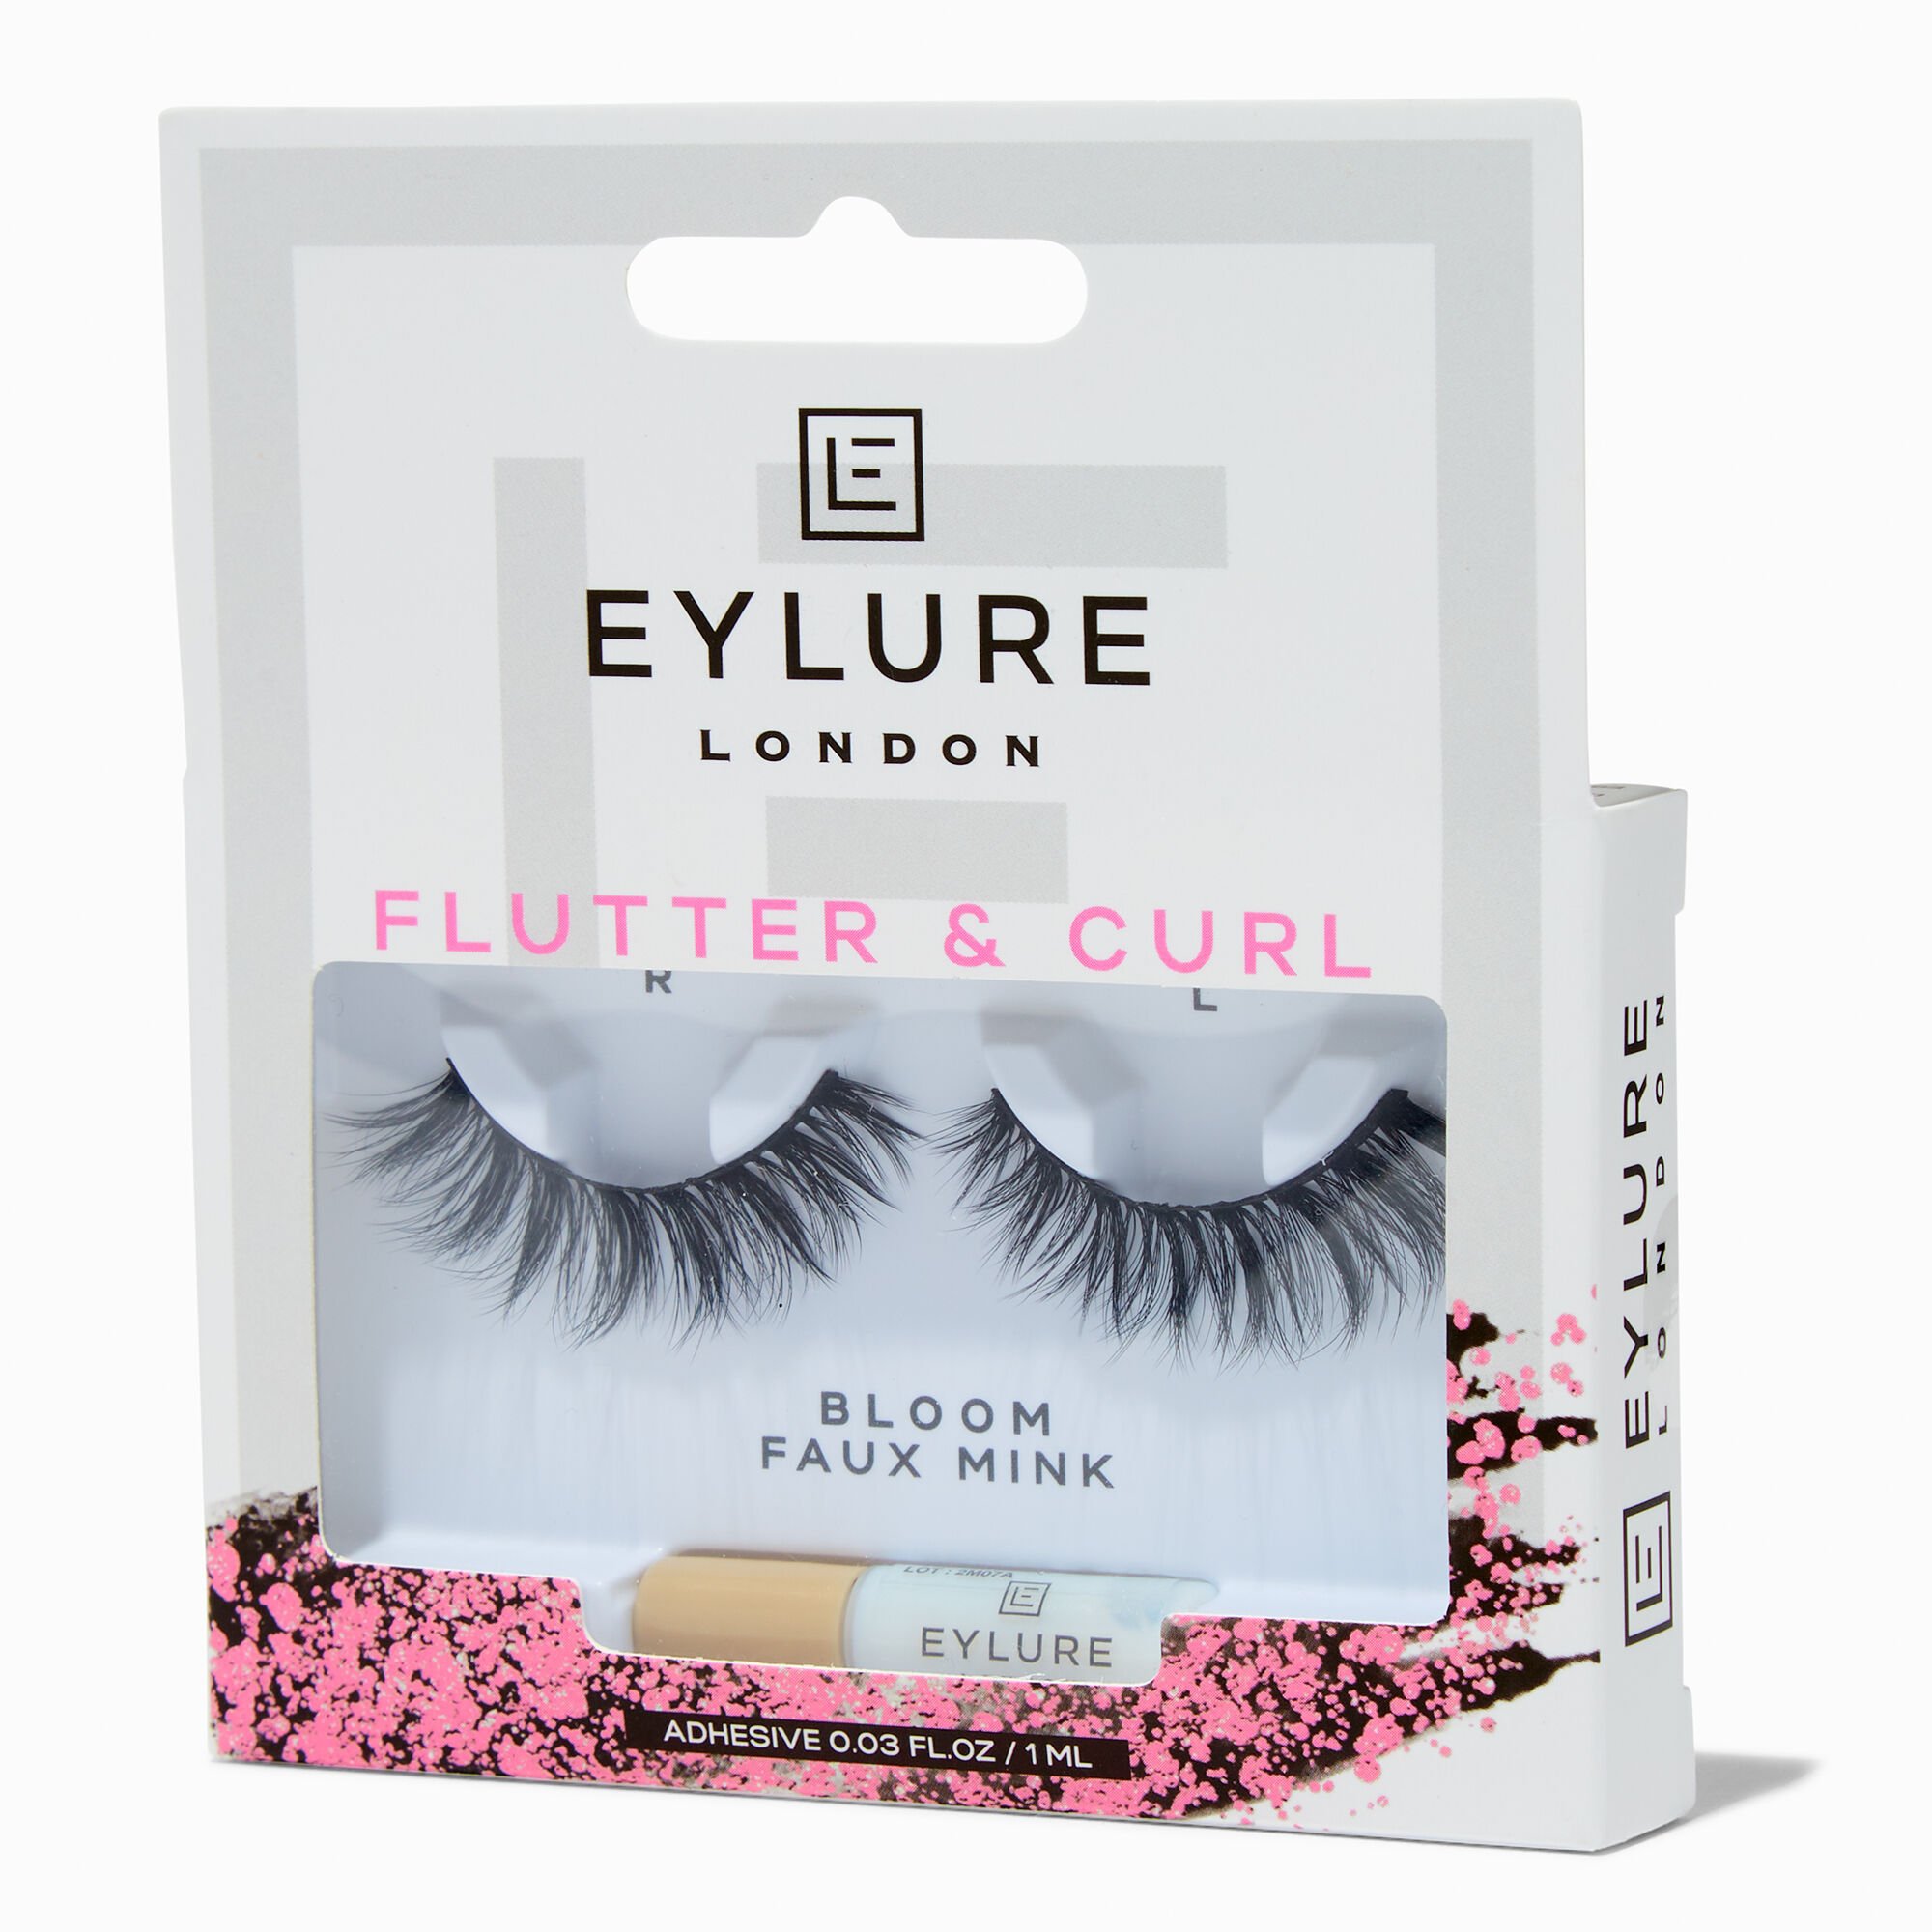 View Claires Eylure Flutter Curl Faux Mink Eyelashes Bloom information